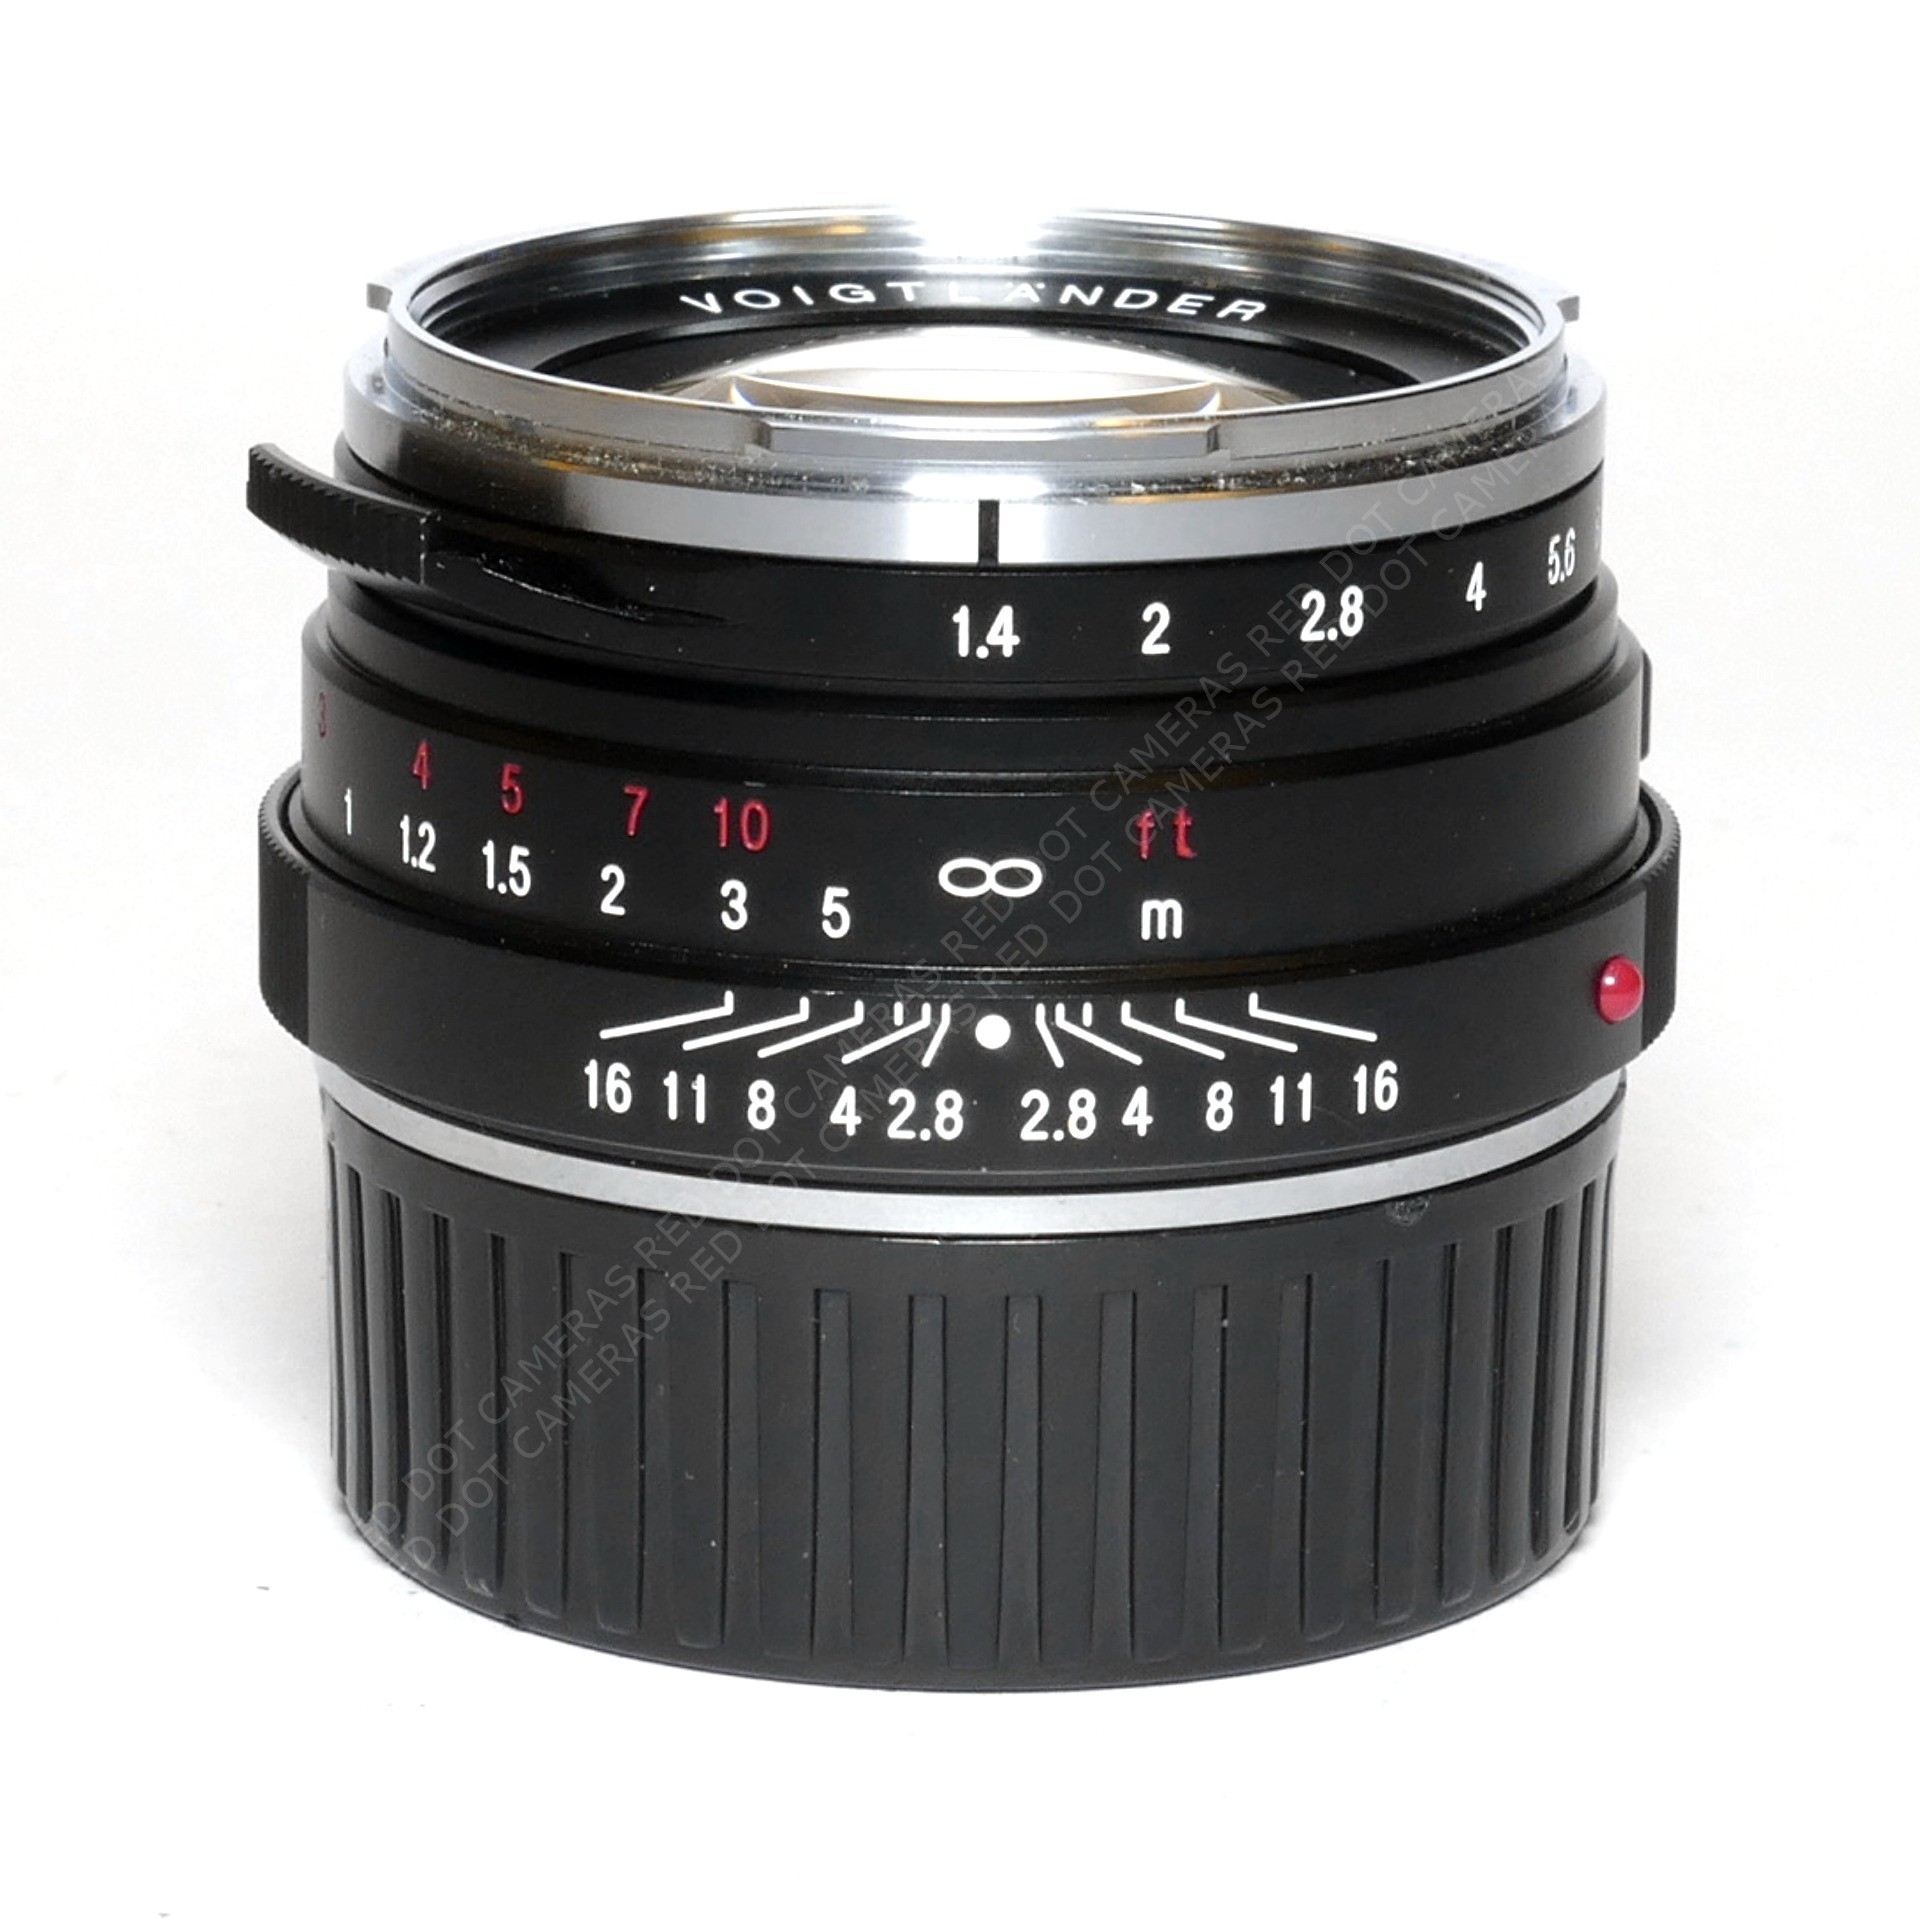 NOKTON classic 40mm f1.4 SC VMマウント単焦点レンズ - レンズ(単焦点)